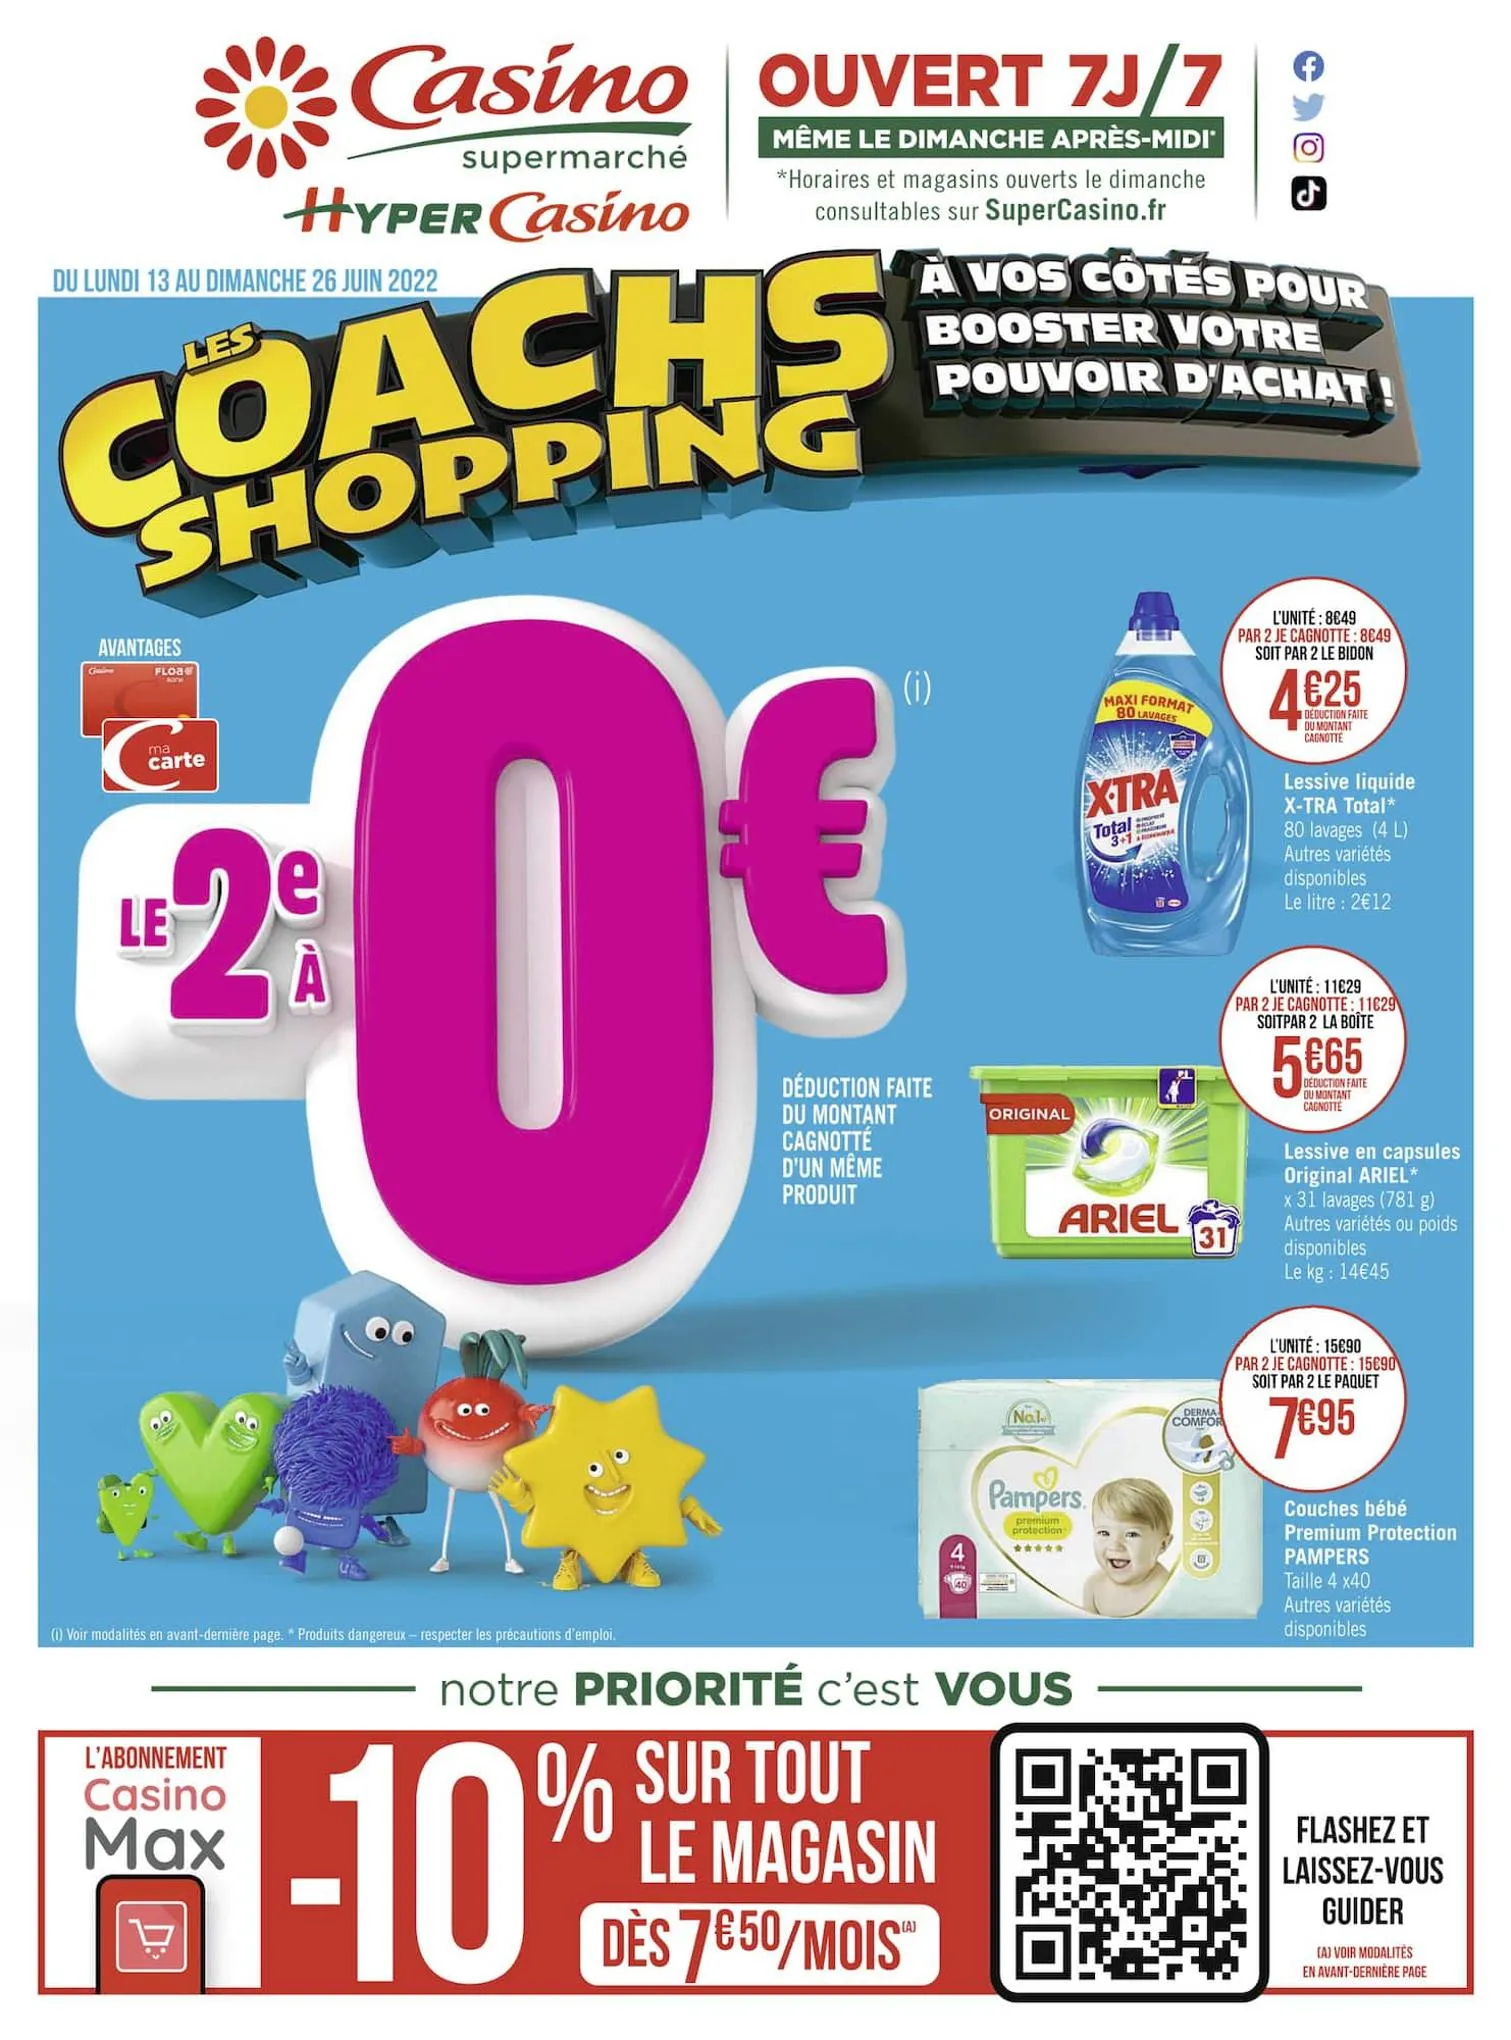 Catalogue Les coachs shopping, page 00040